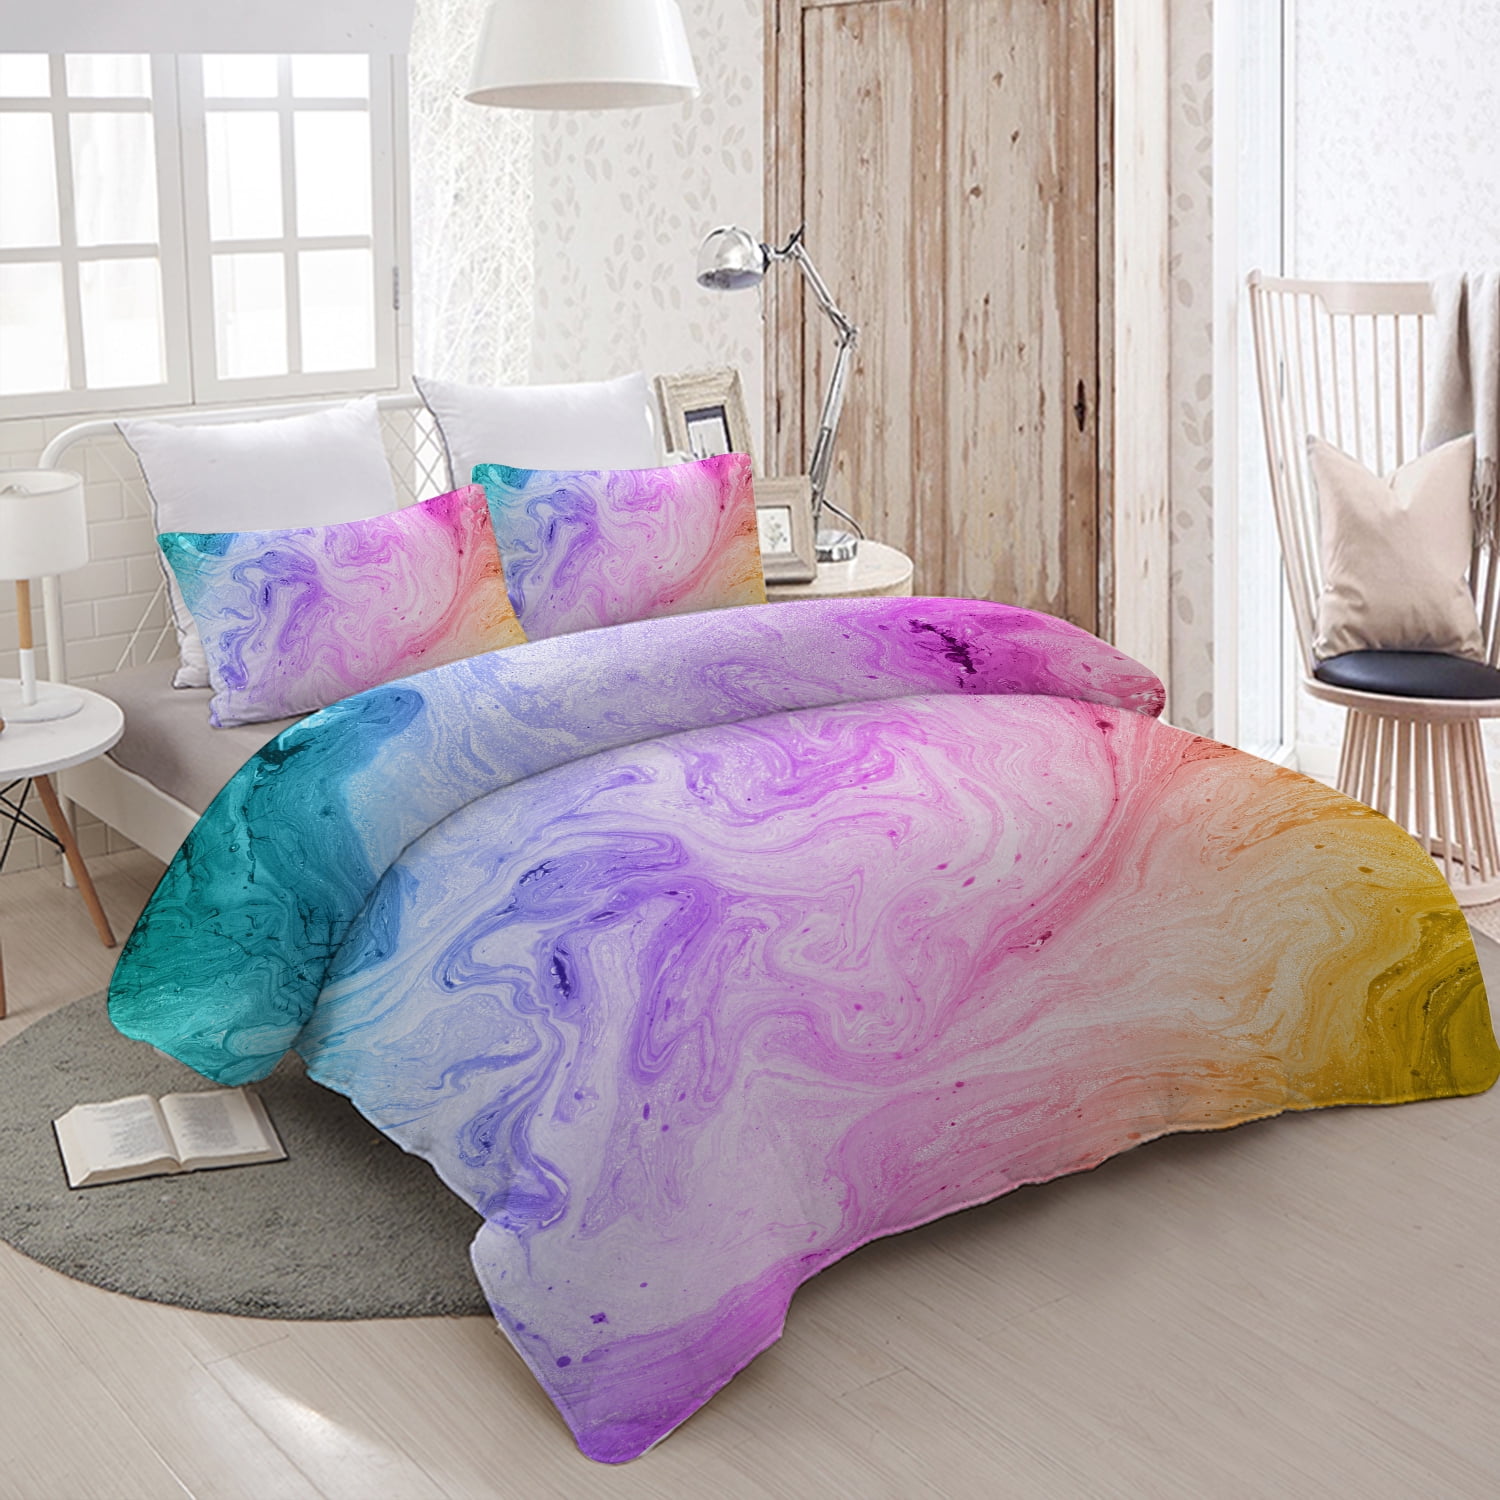 Rapport Kids "Unicorn & Rainbows" Glow InThe Dark Reversible Duvet Cover Bed Set 